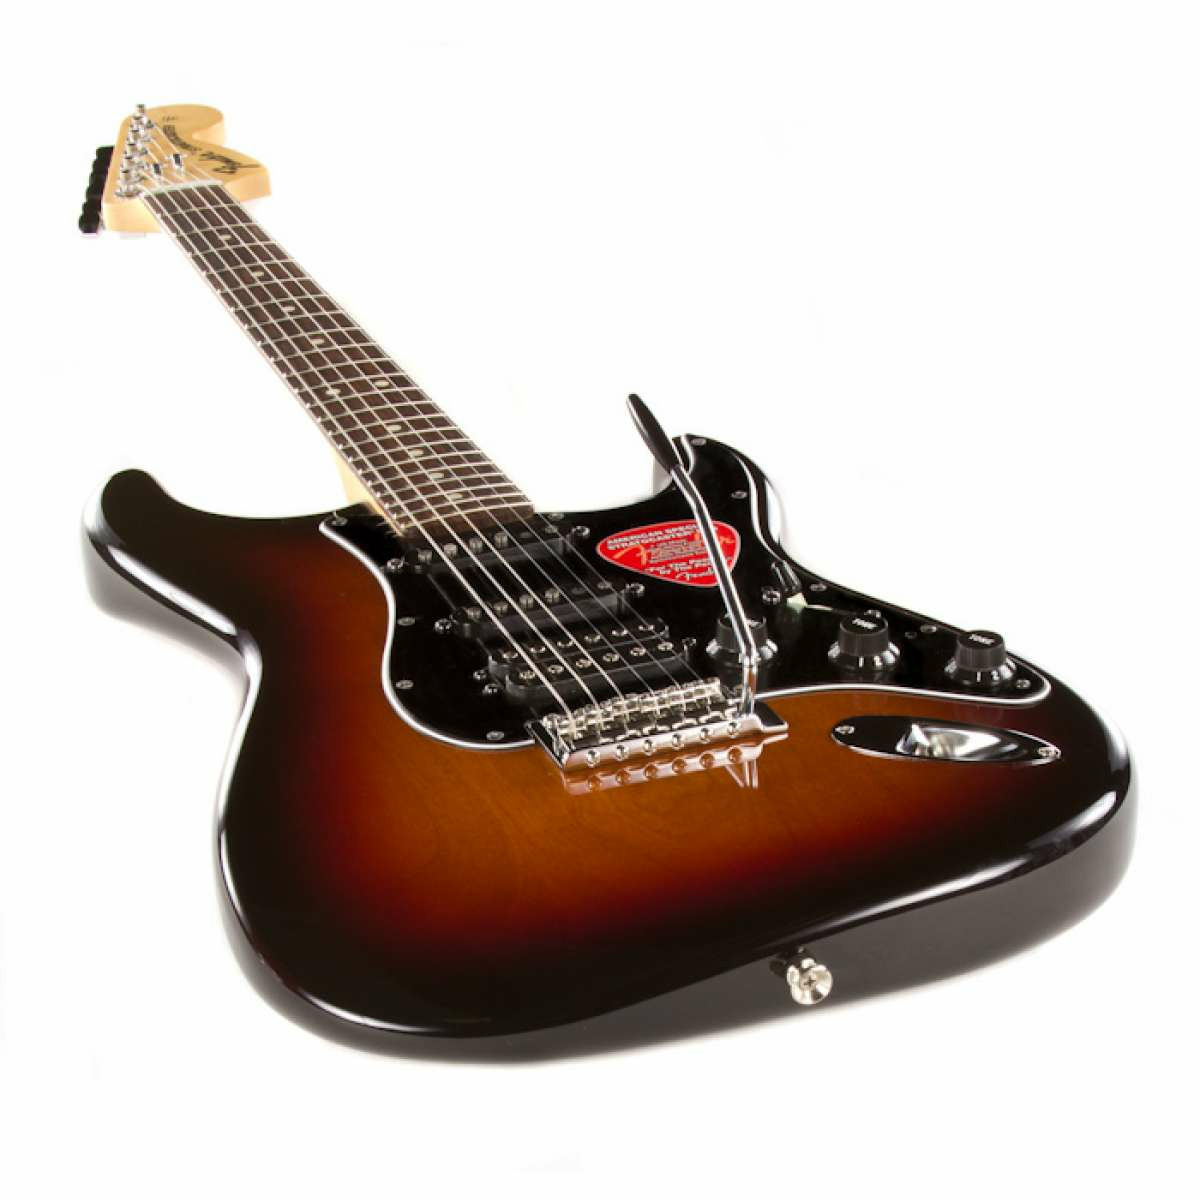 Stratocaster цена. Fender American Special Stratocaster HSS Rosewood Fingerboard 3-Color Sunburst. Электрогитара Fender Stratocaster. Электрогитара Strat мензура Fender. Fender Stratocaster санберст.